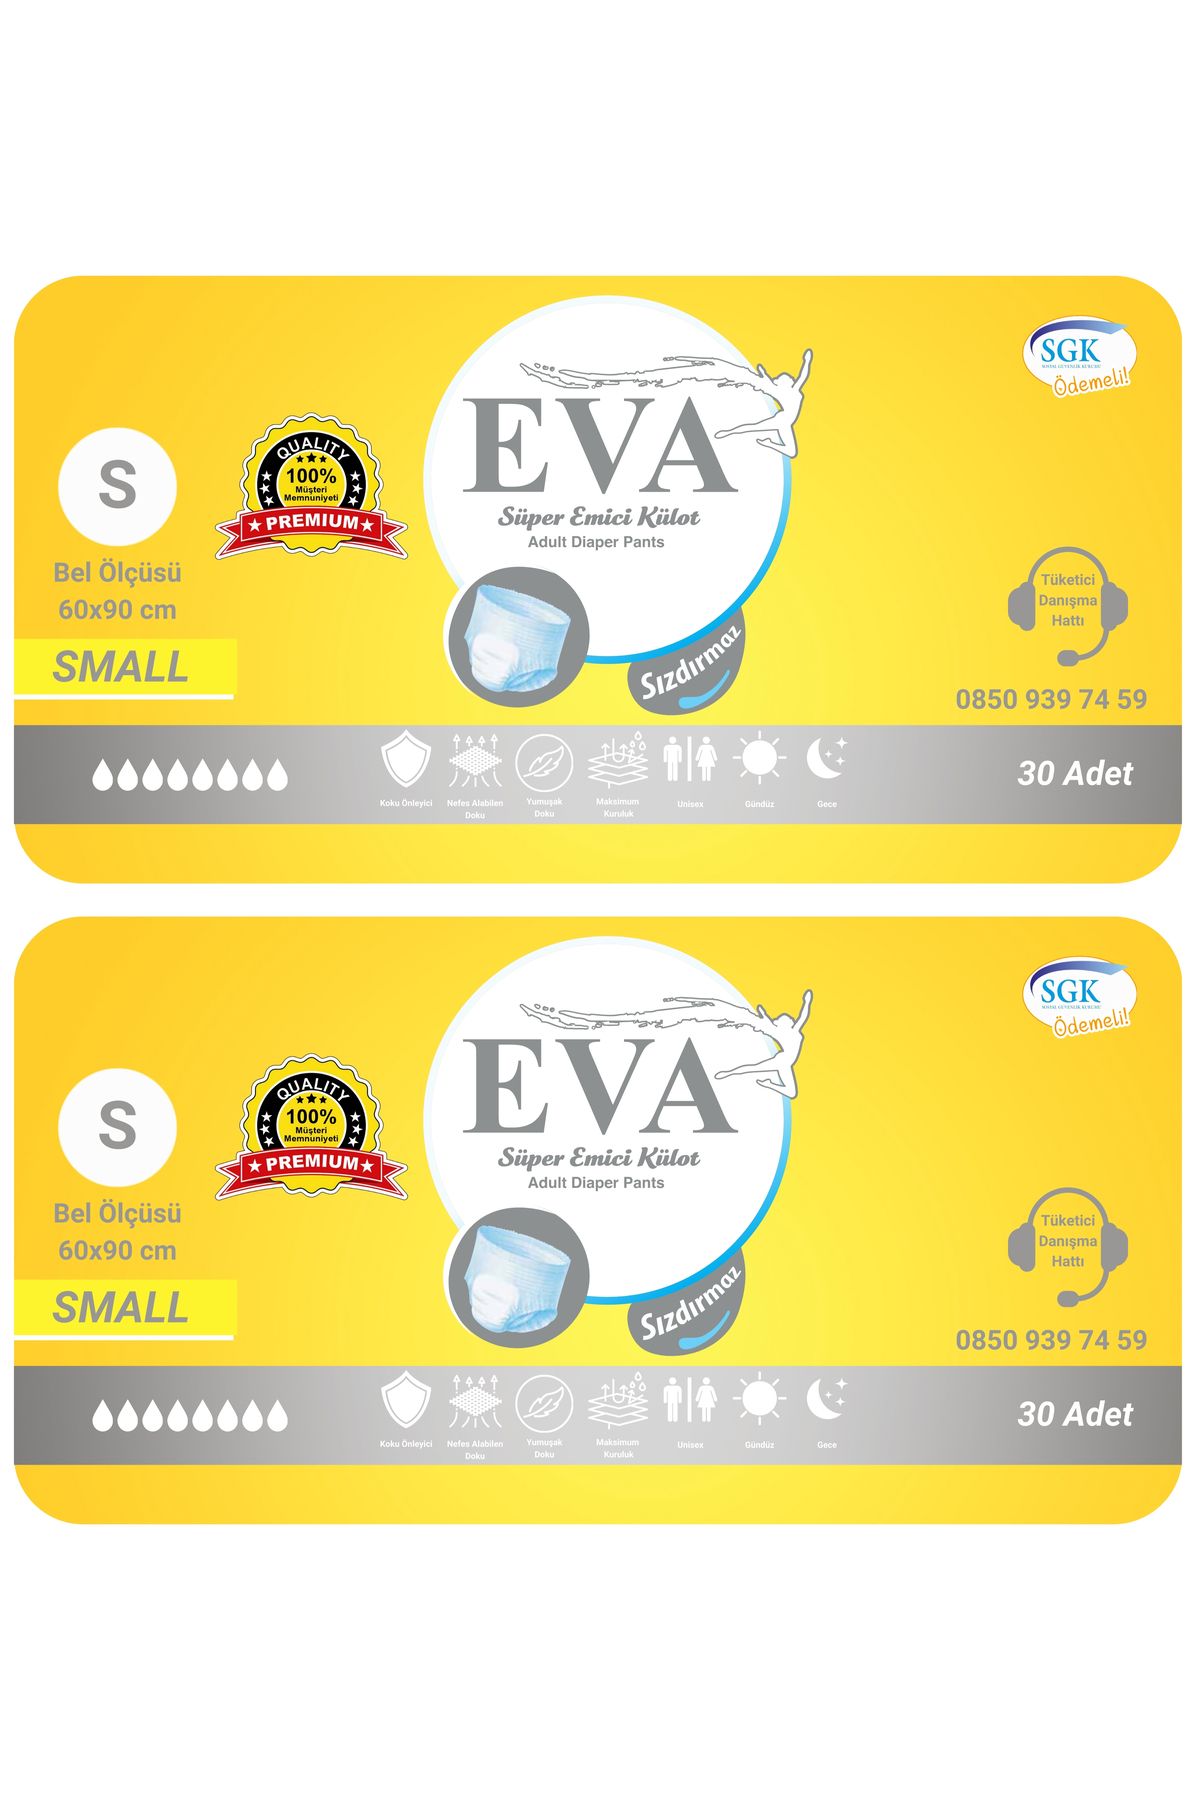 EVA Premium Külot 60 Adet Small Medium Large Xlarge Kadın Erkek Hasta Bezi